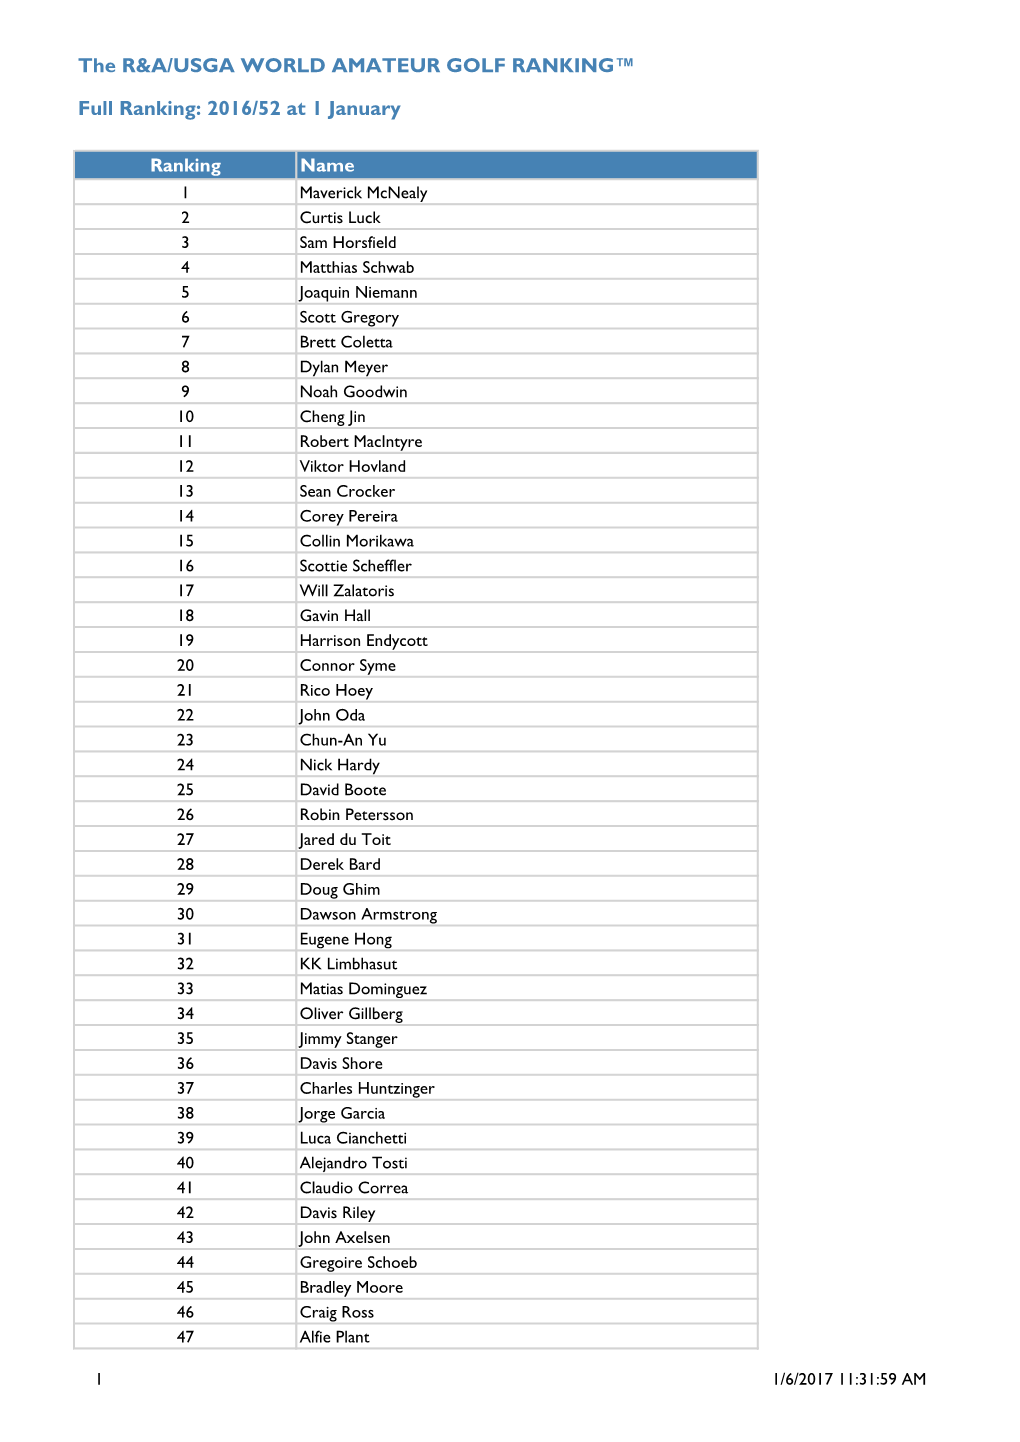 The R&A/USGA WORLD AMATEUR GOLF RANKING™ Full Ranking